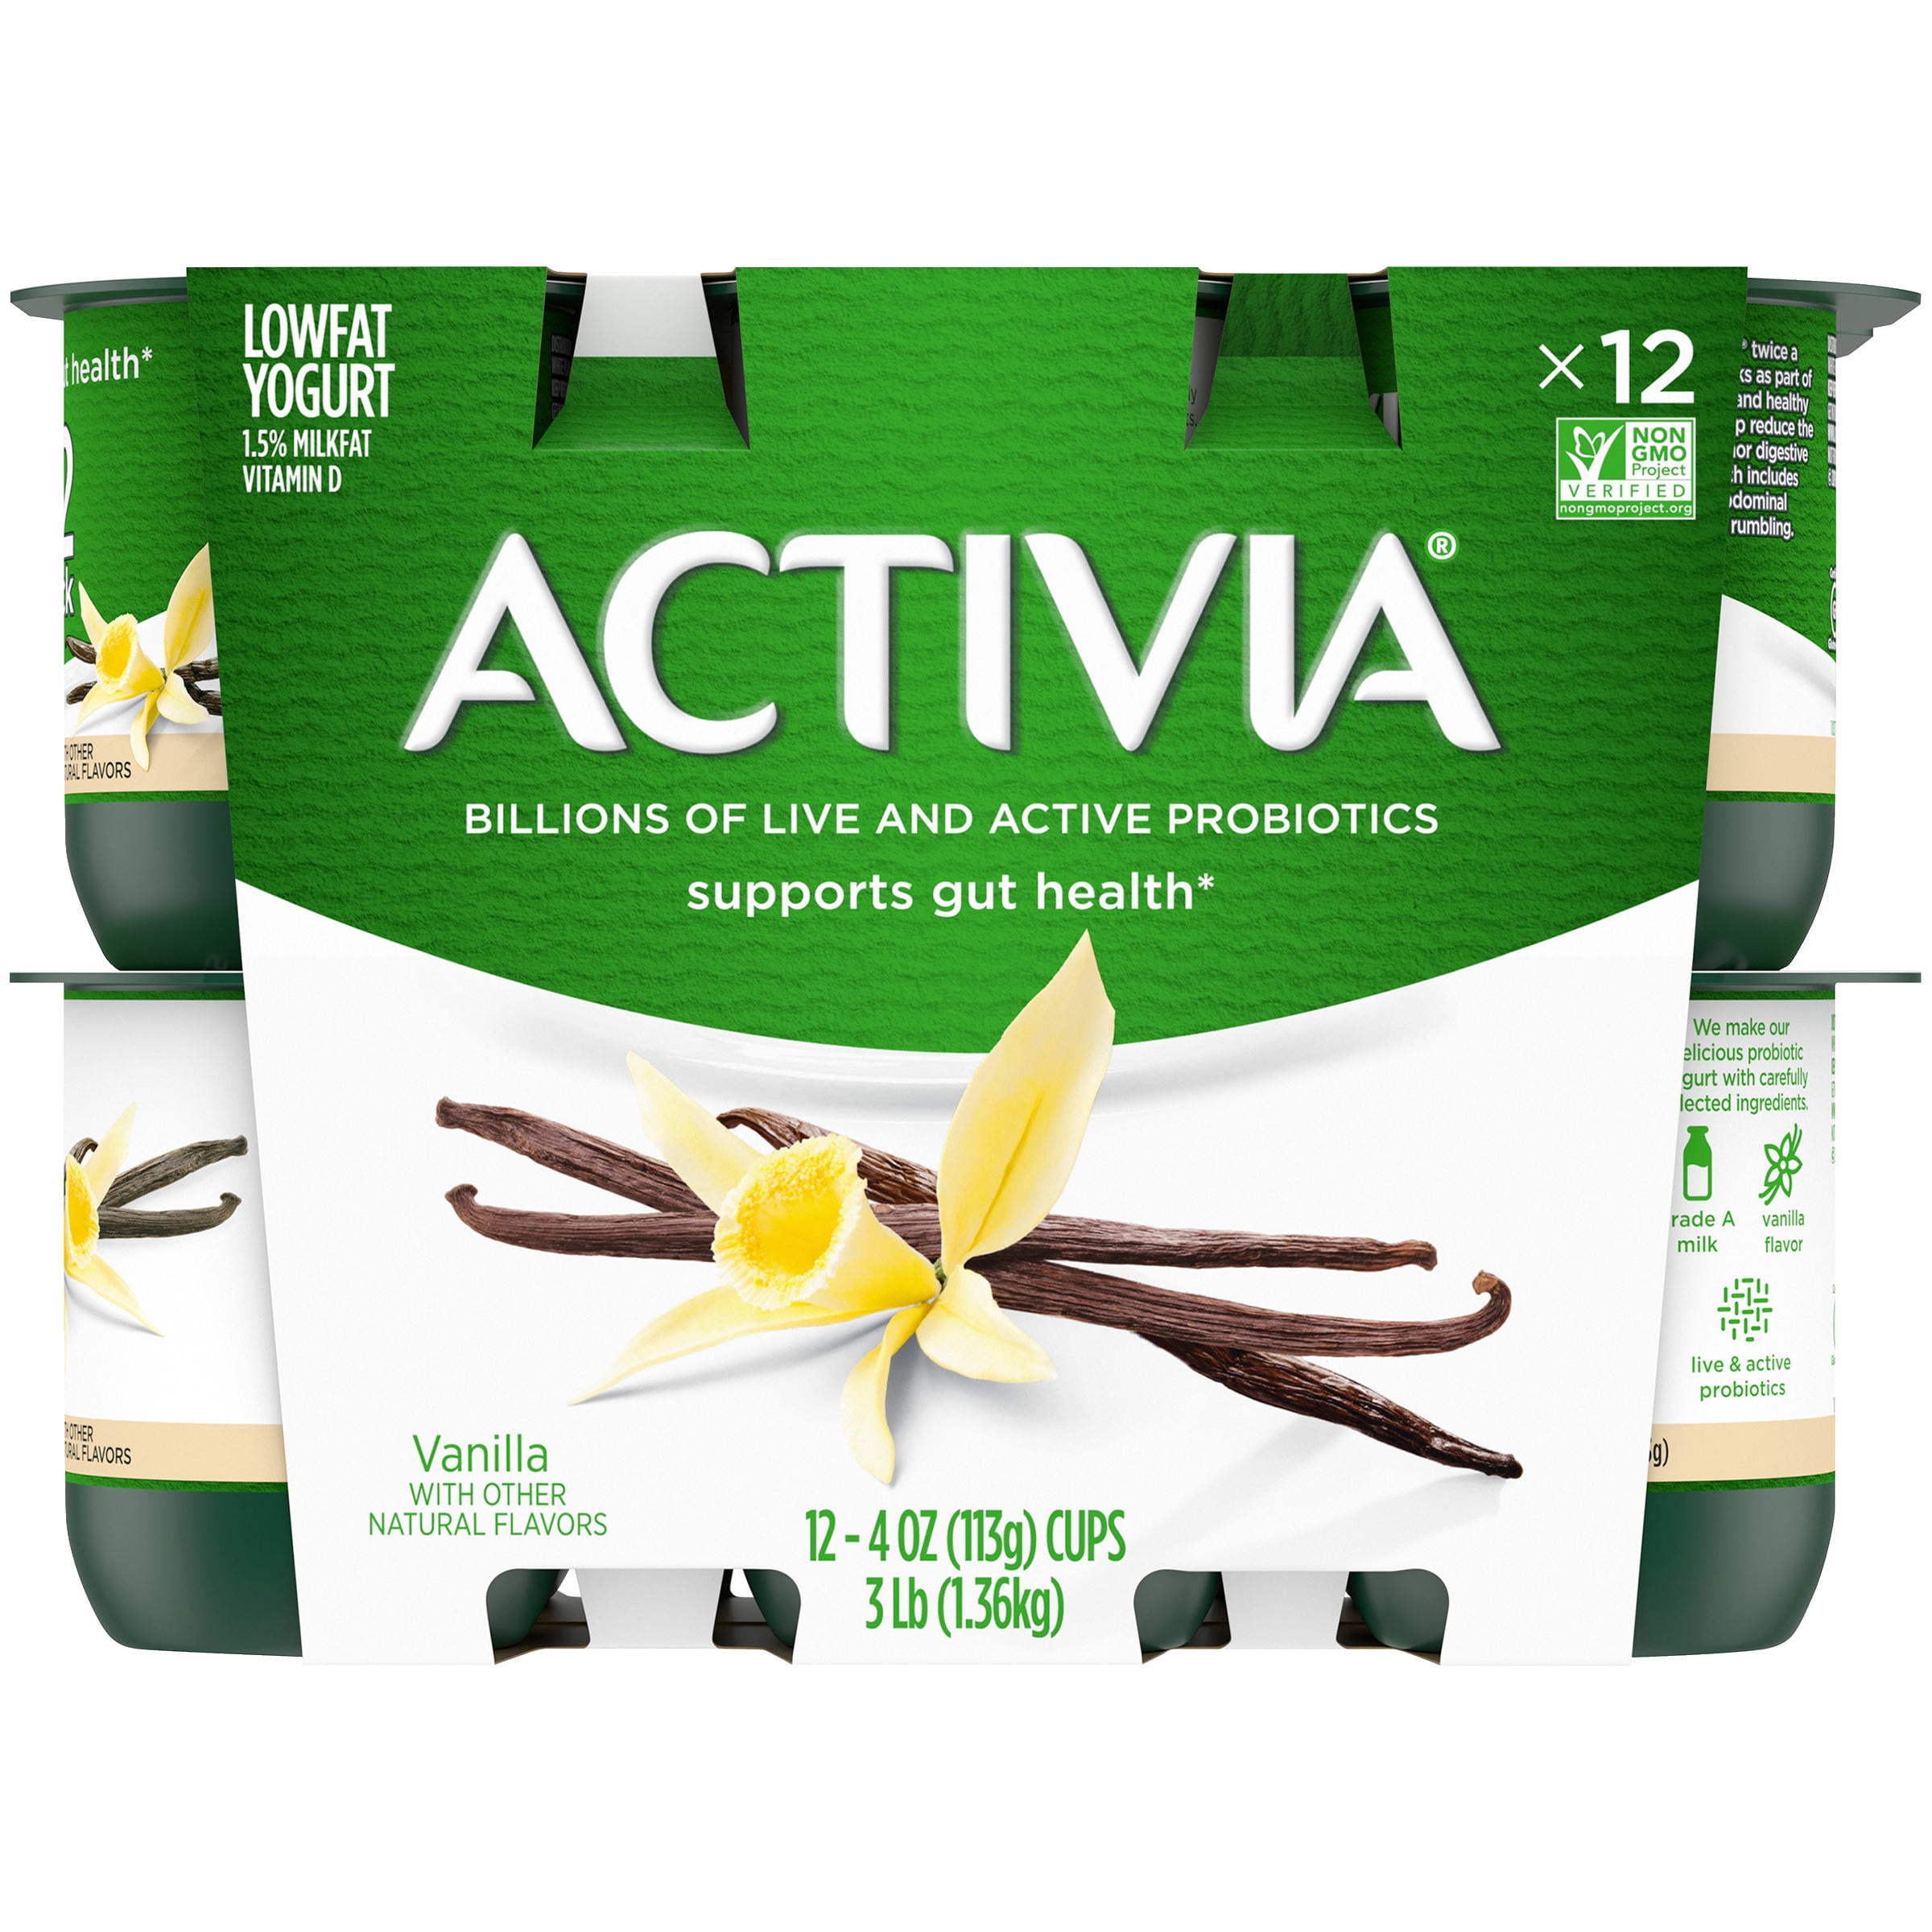 Dannon Activia Probiotic Yogurt Vanilla 4oz EA 4PK